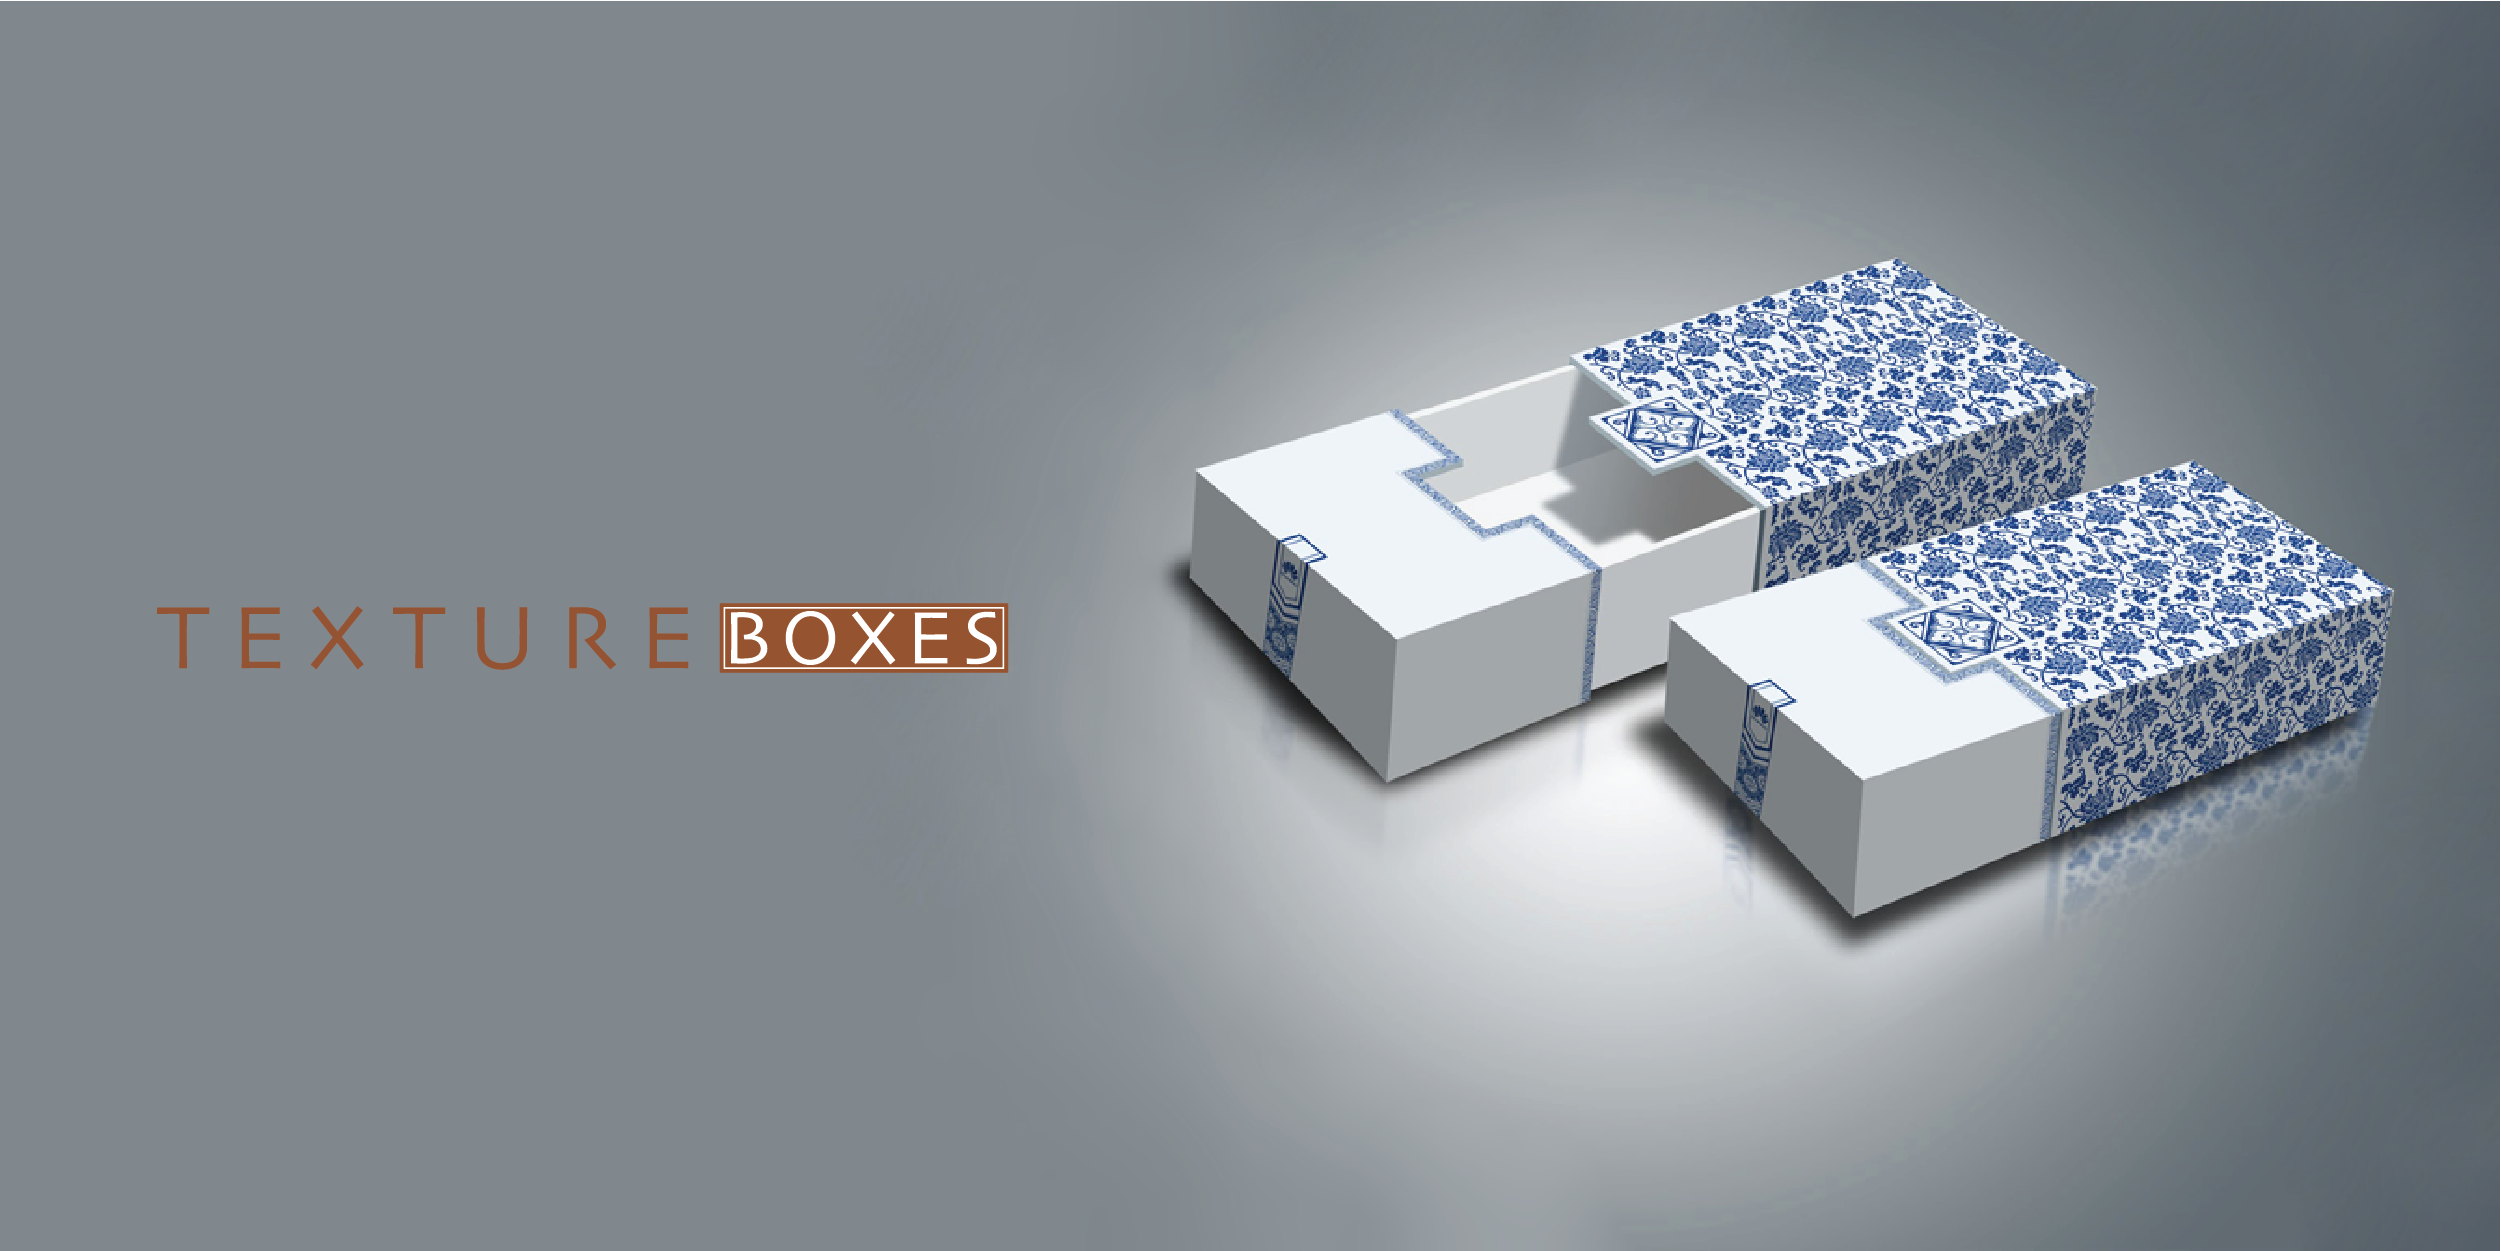 Texture boxes